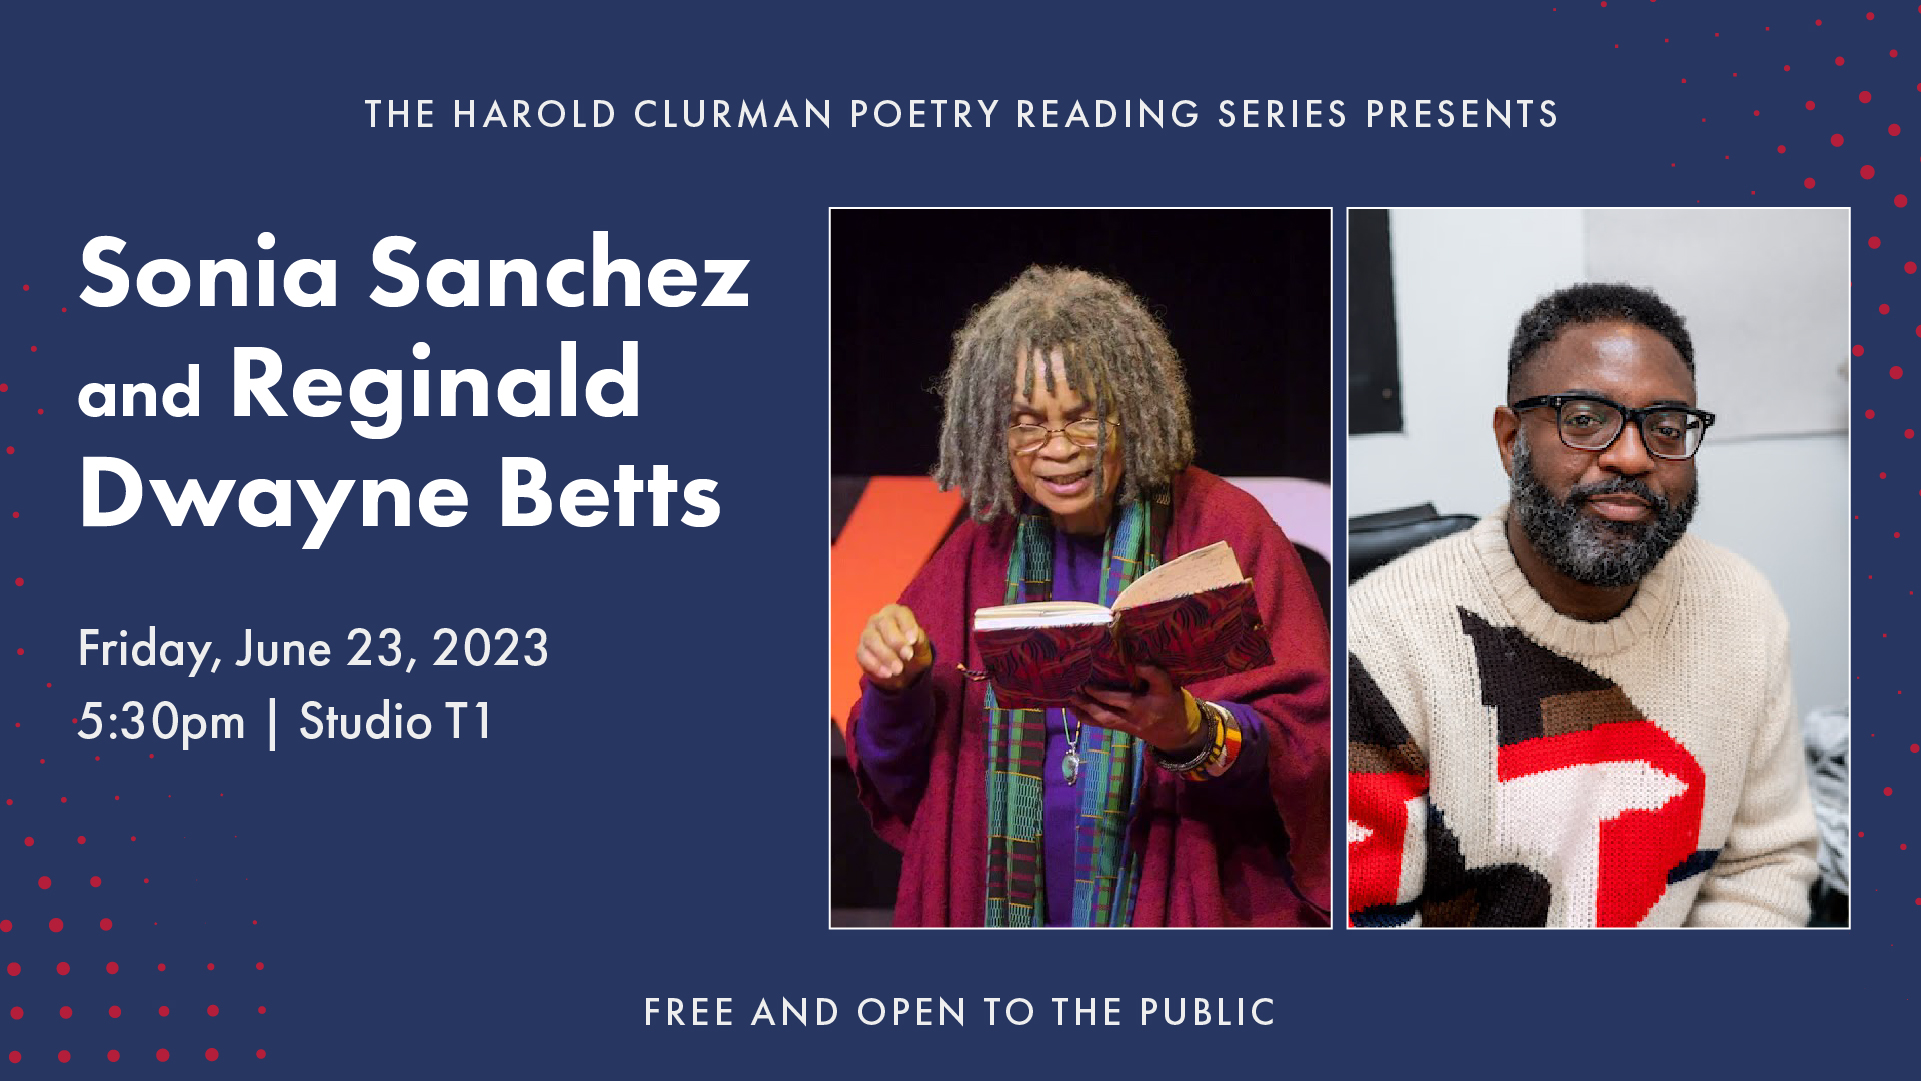 The Harold Clurman Poetry Reading Series Presents: Sonia Sanchez and Reginald Dwayne Betts